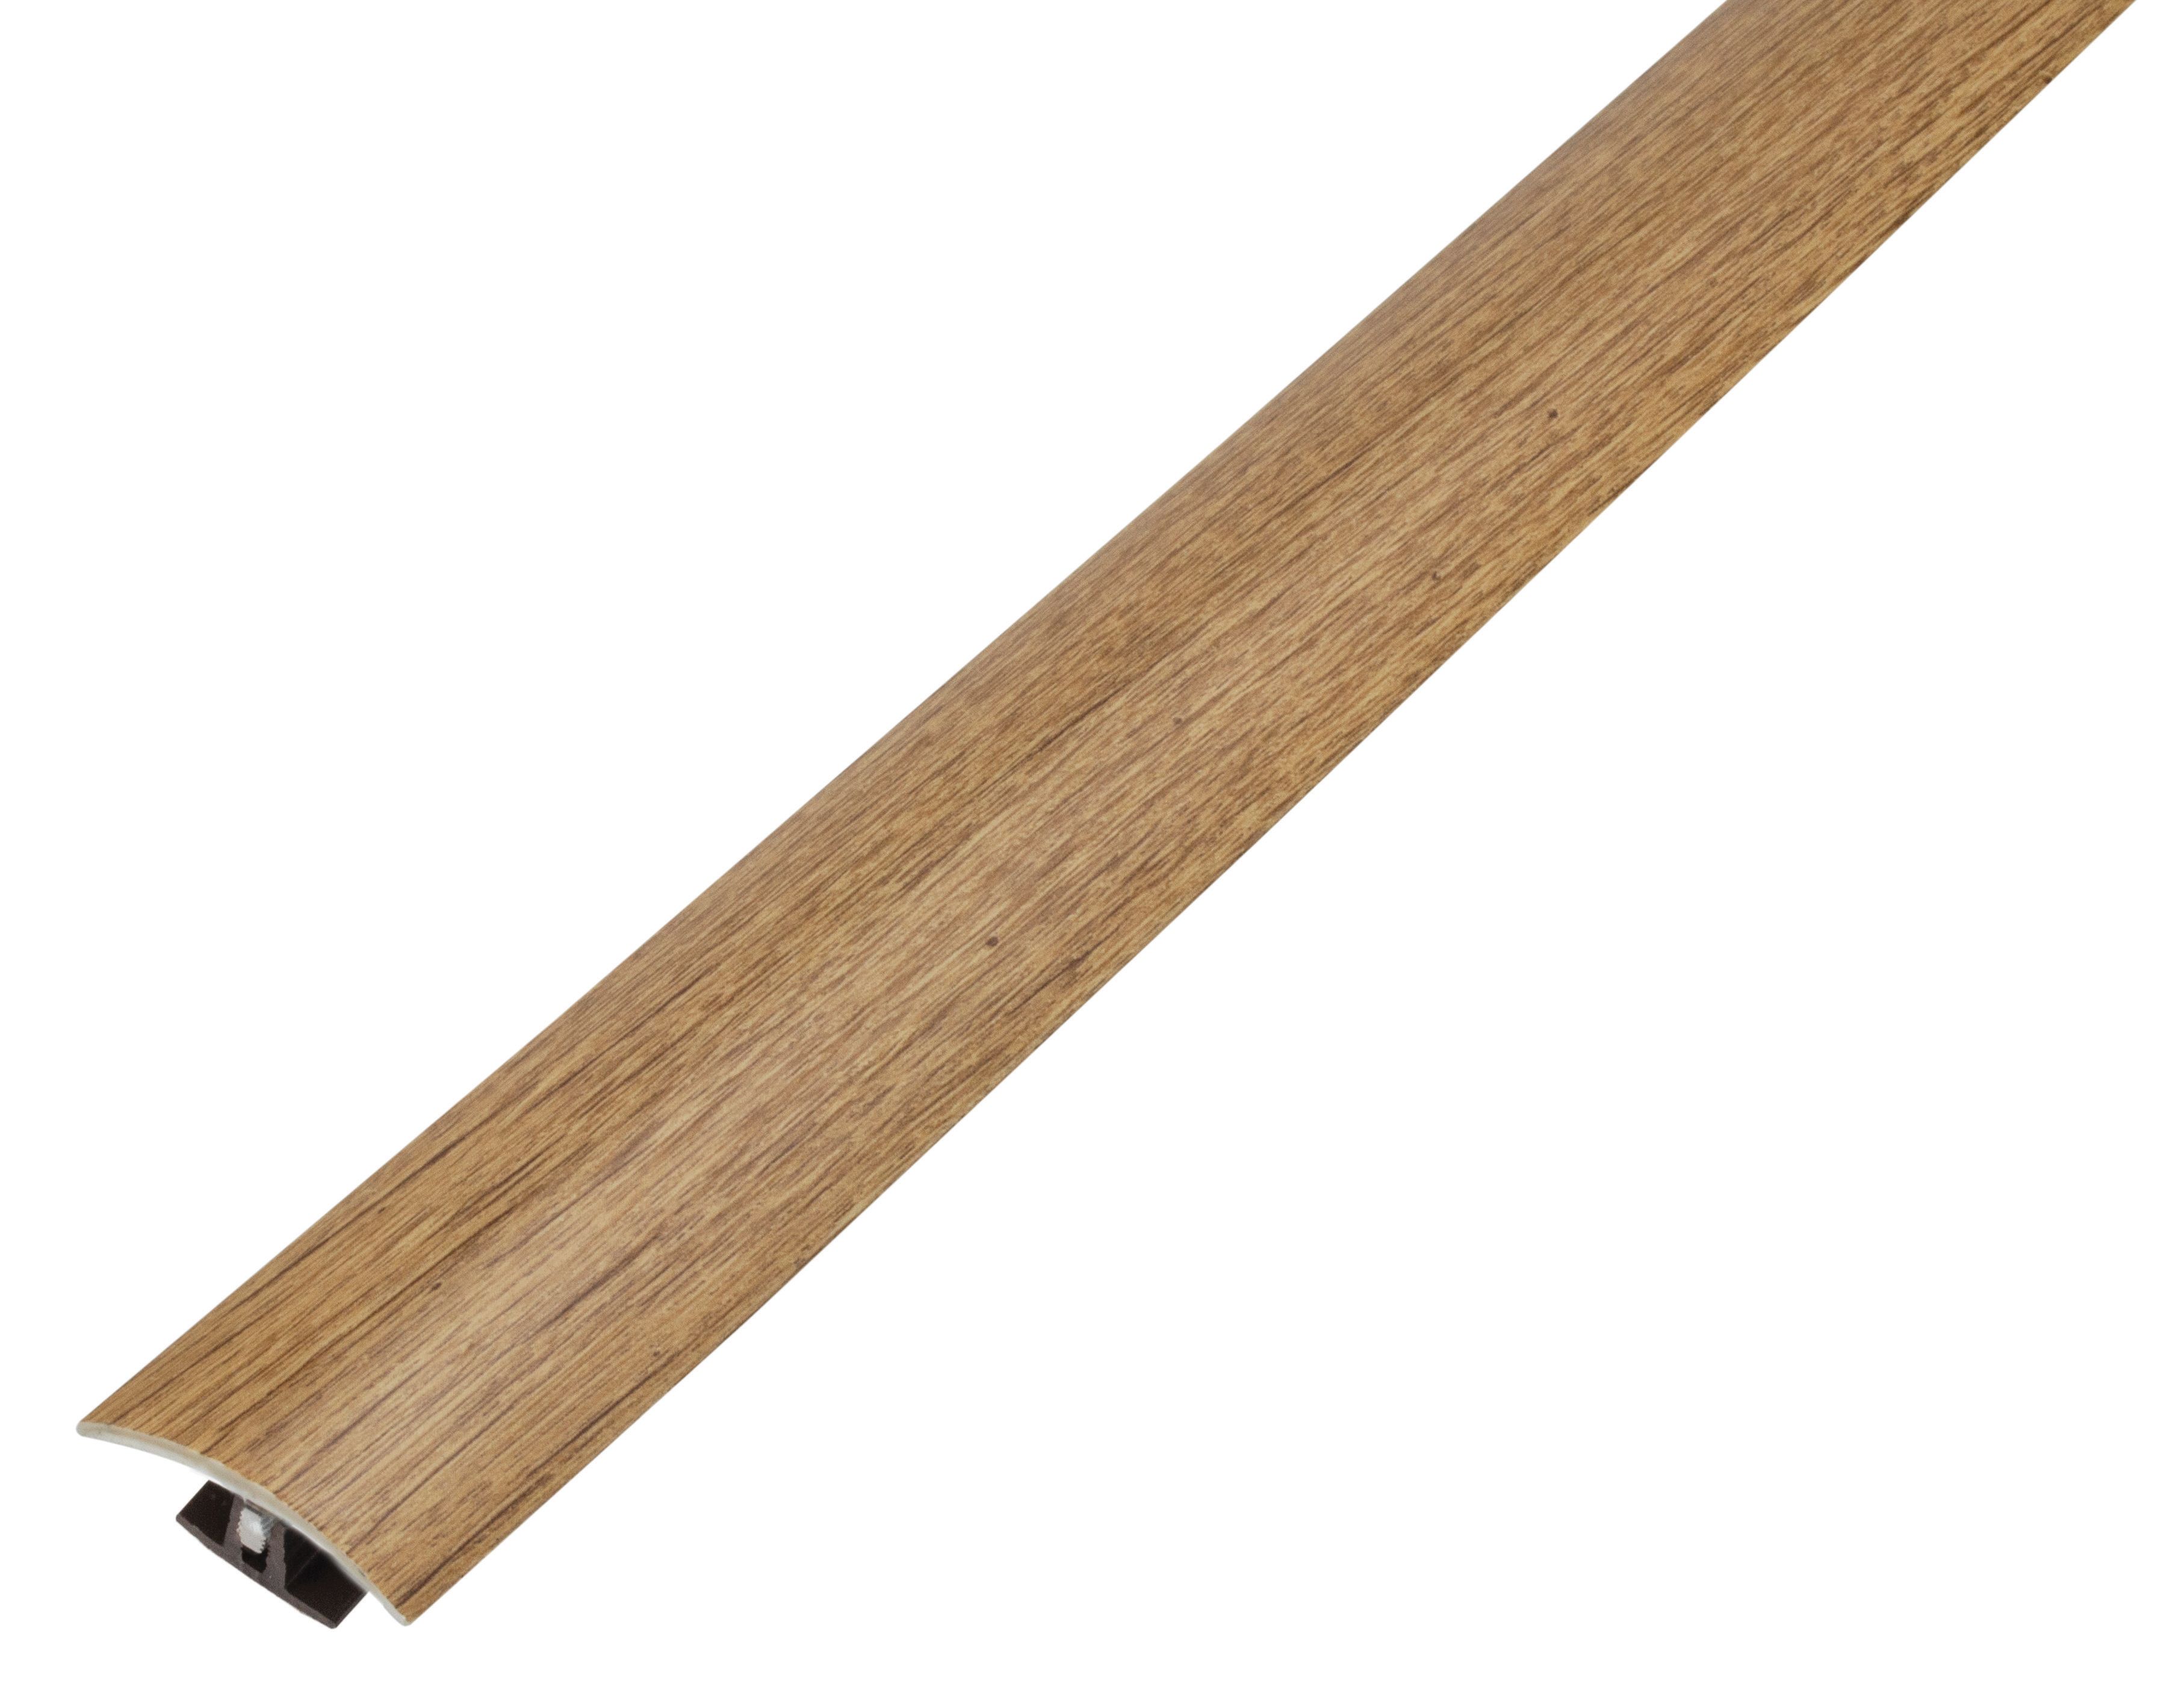 Oak Variable Height Threshold Bar - 0.9m